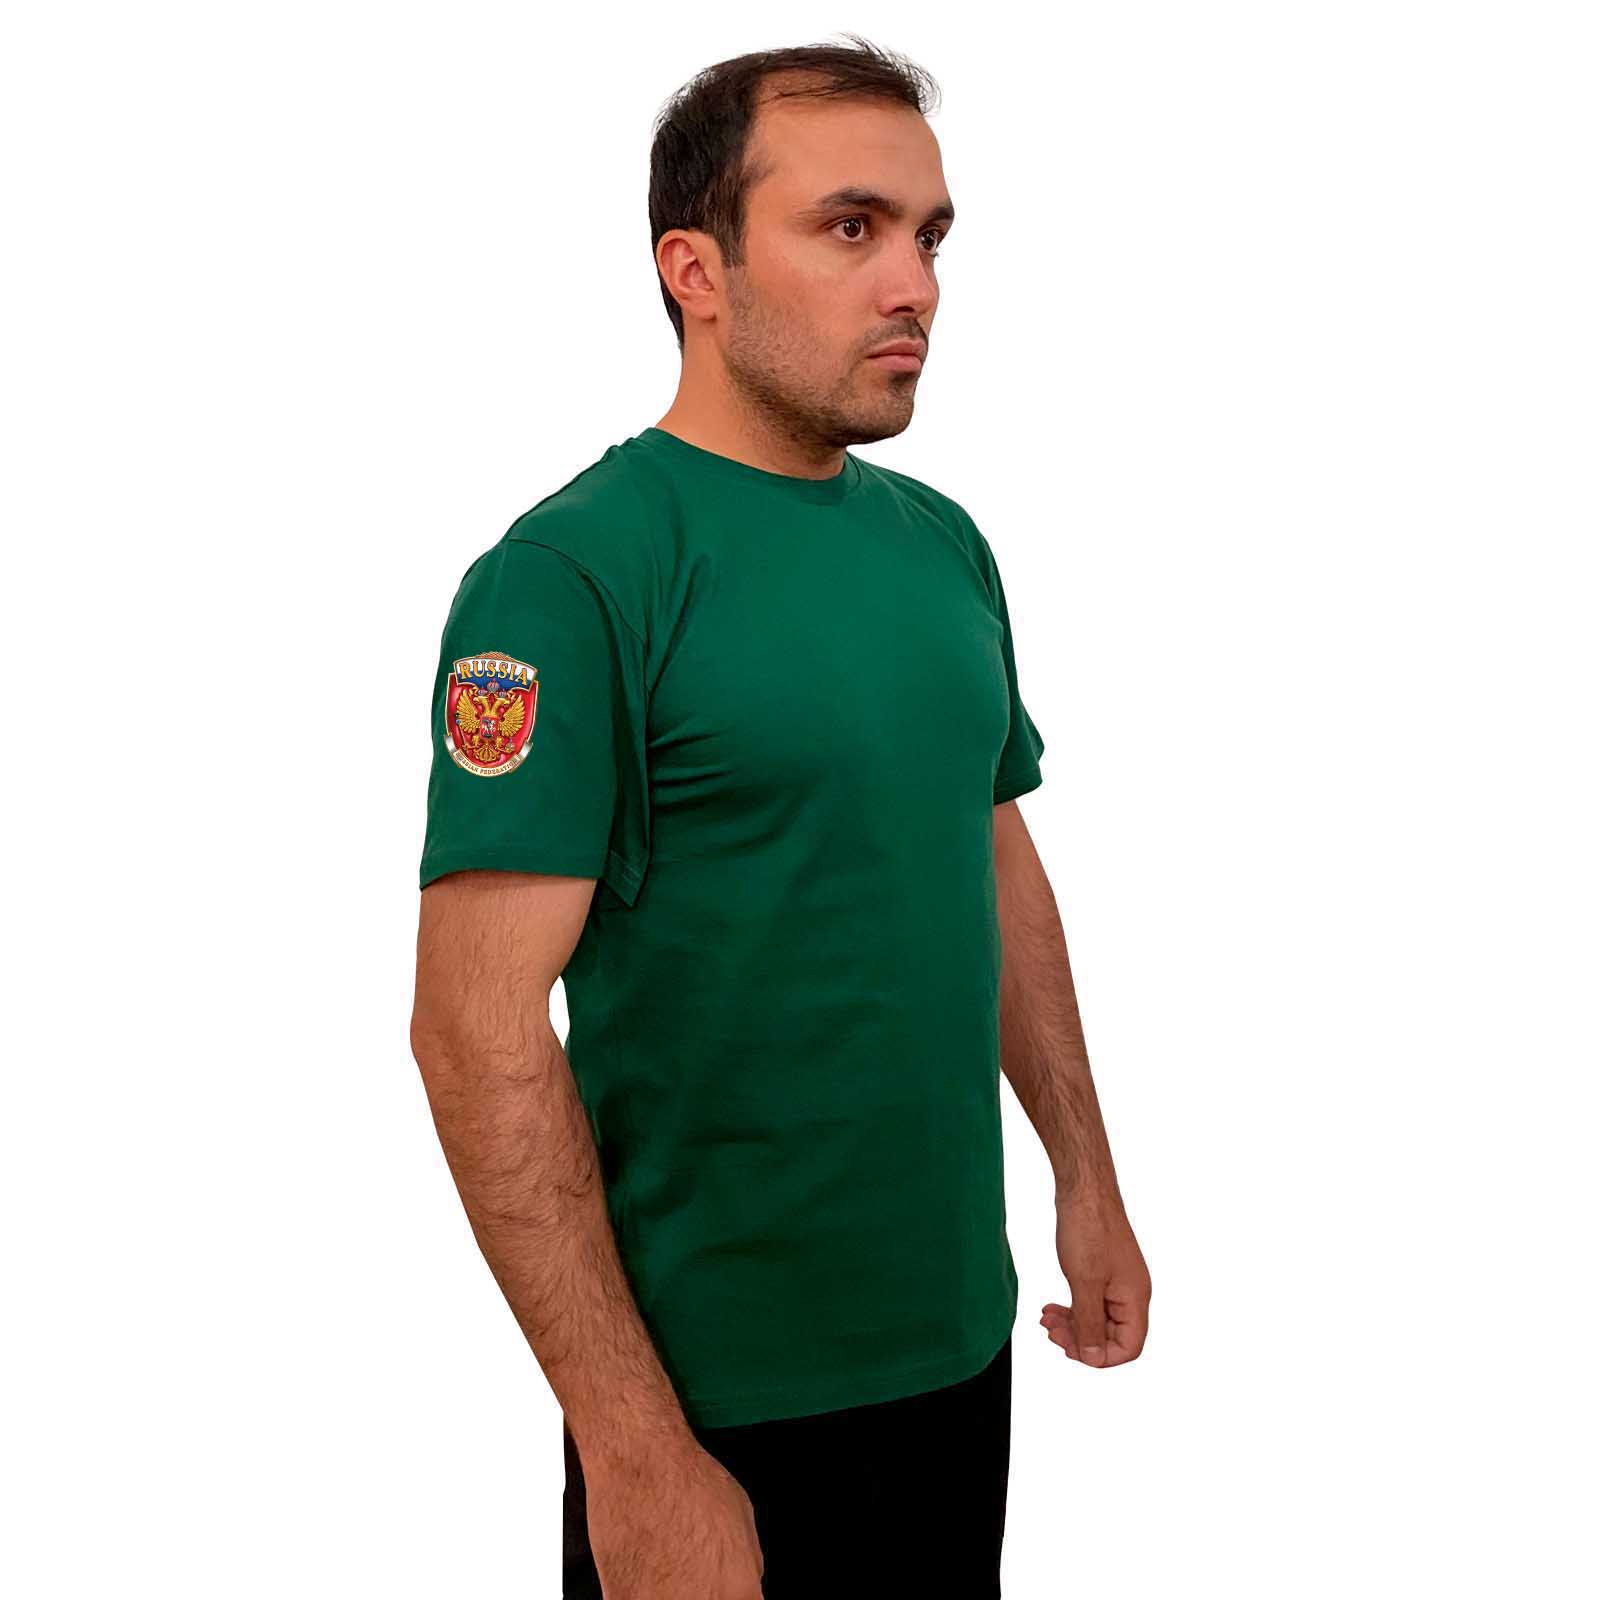 Зелёный футболка с термотрансфером Russia на рукаве